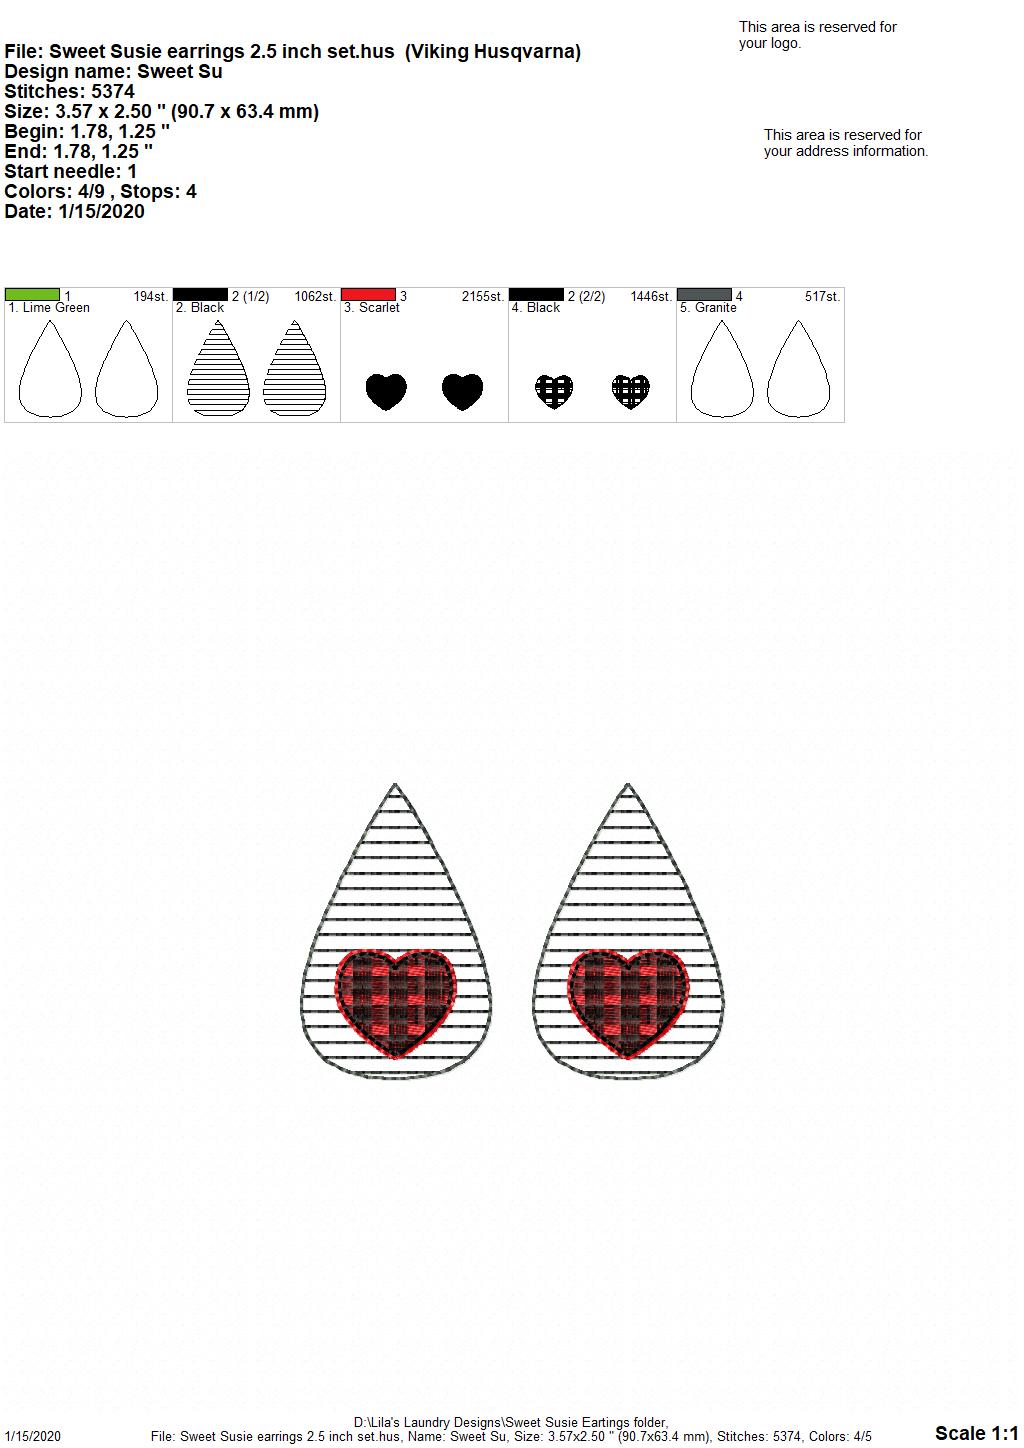 Sweet Susie Earrings - 3 sizes - Digital Embroidery Design